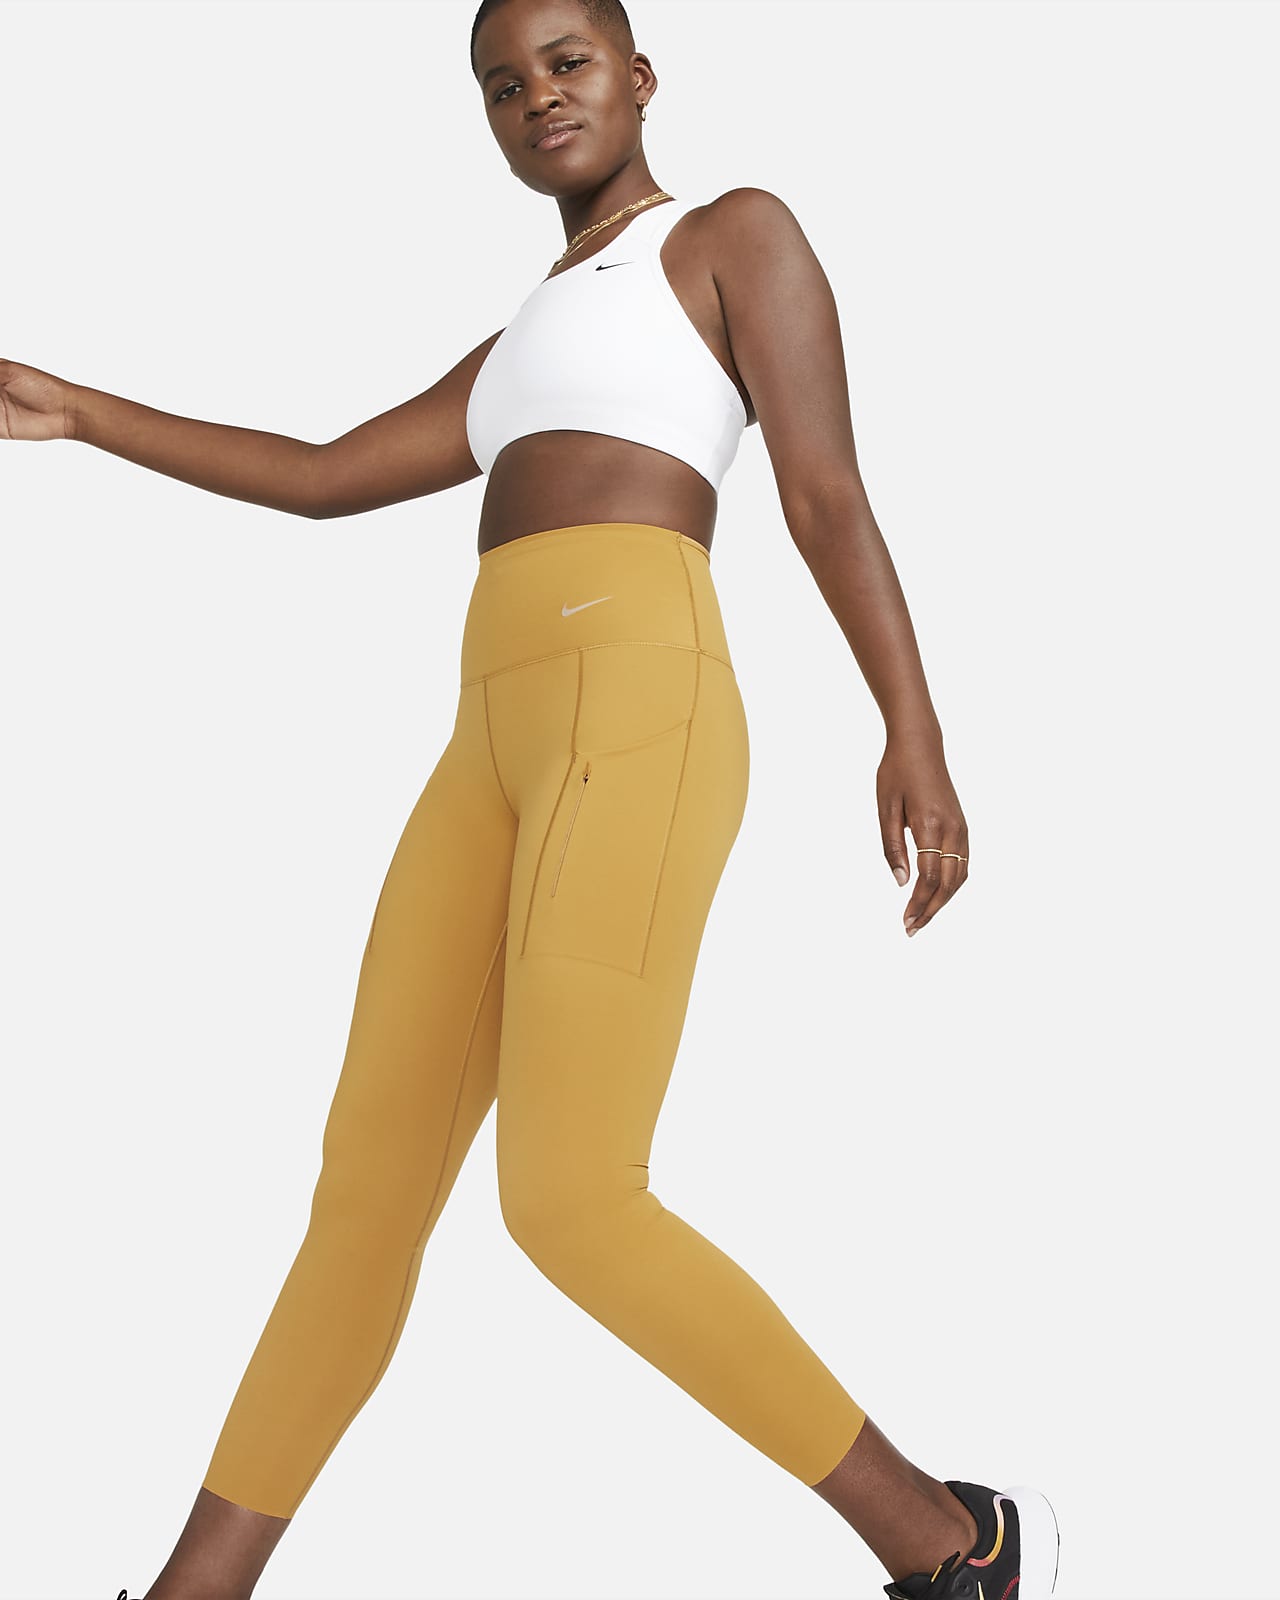 Nike Go-leggings i 7/8-længde med høj talje, støtte og lommer til kvinder. Nike DK